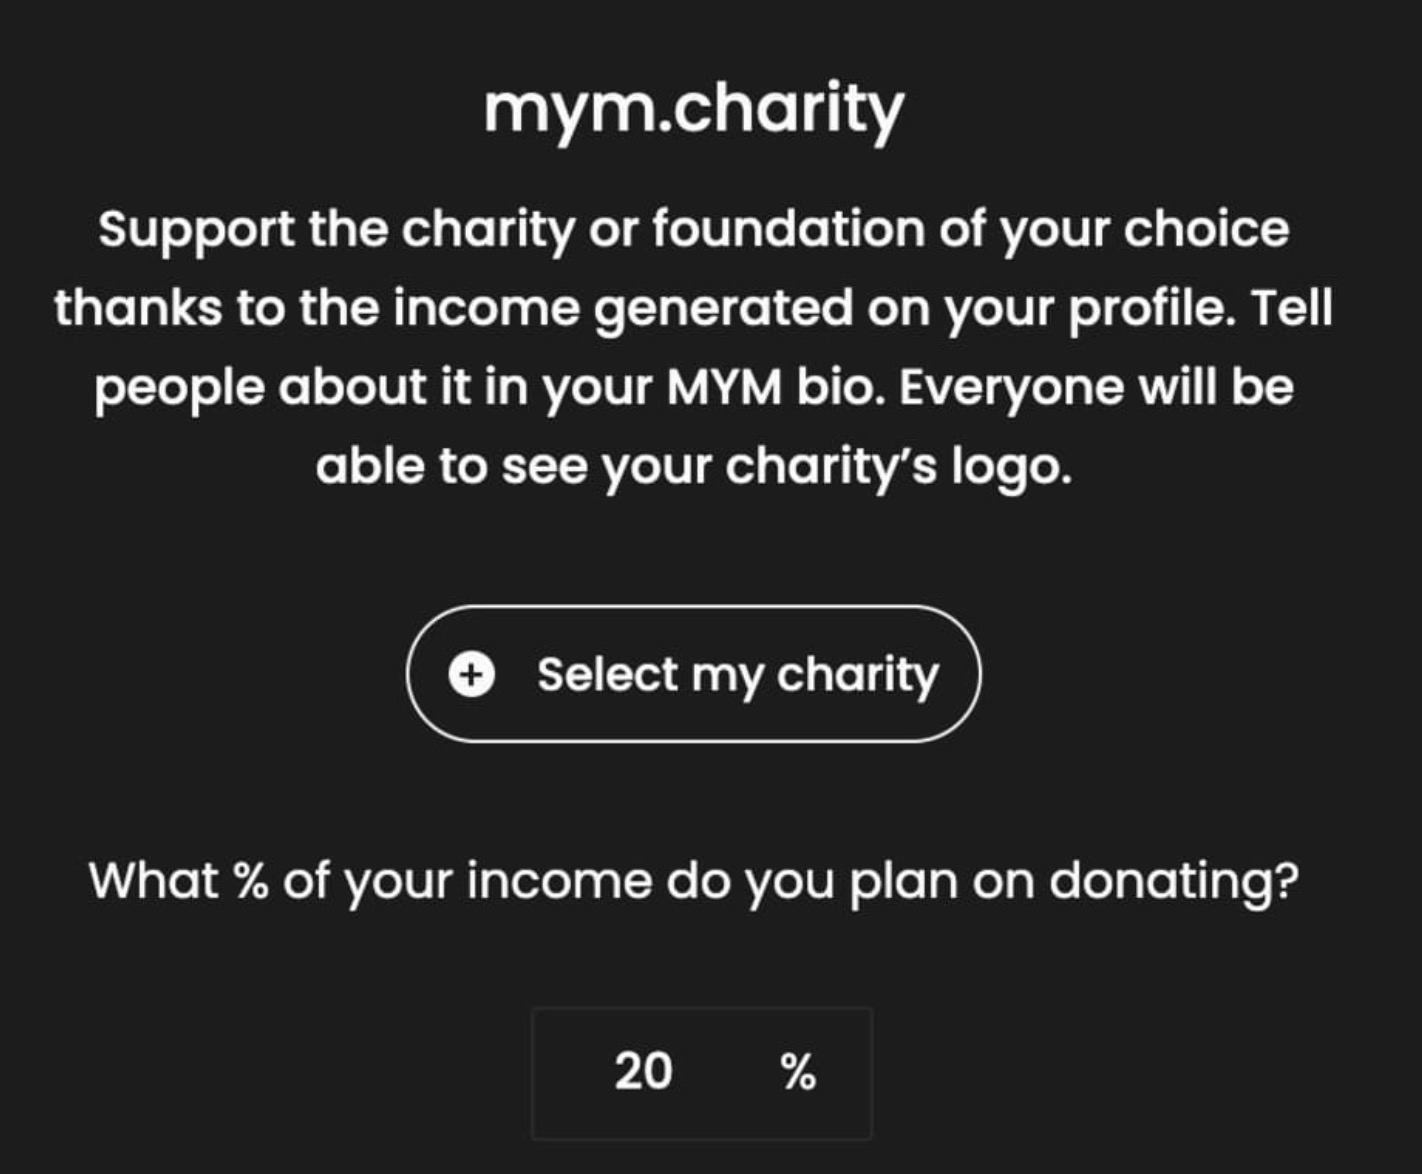 mym charity